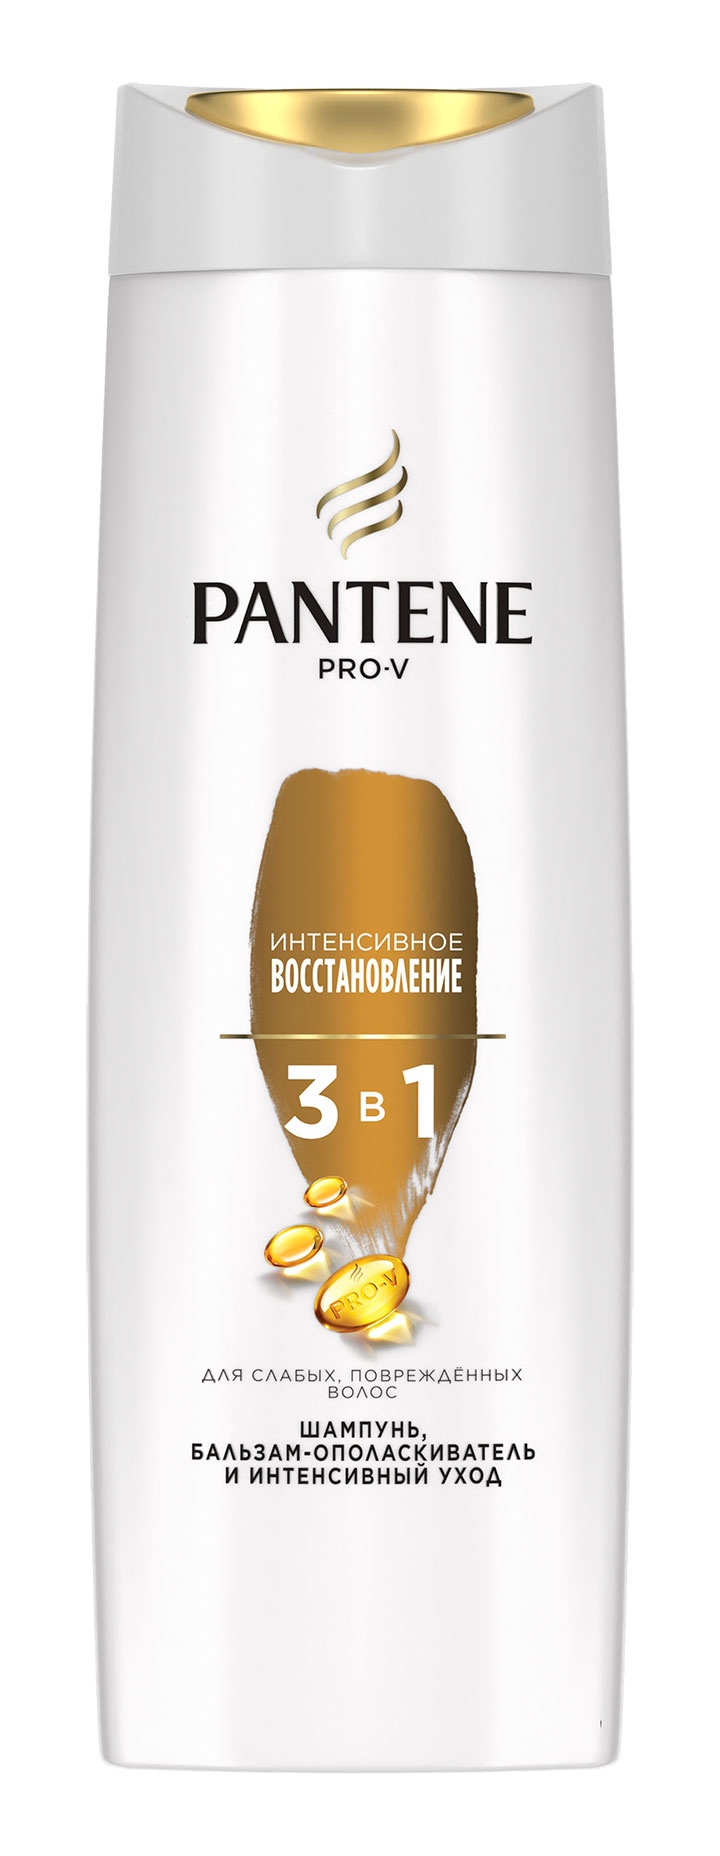 Pantene PRO-V 3 в 1 Интенсивное Восстановление.